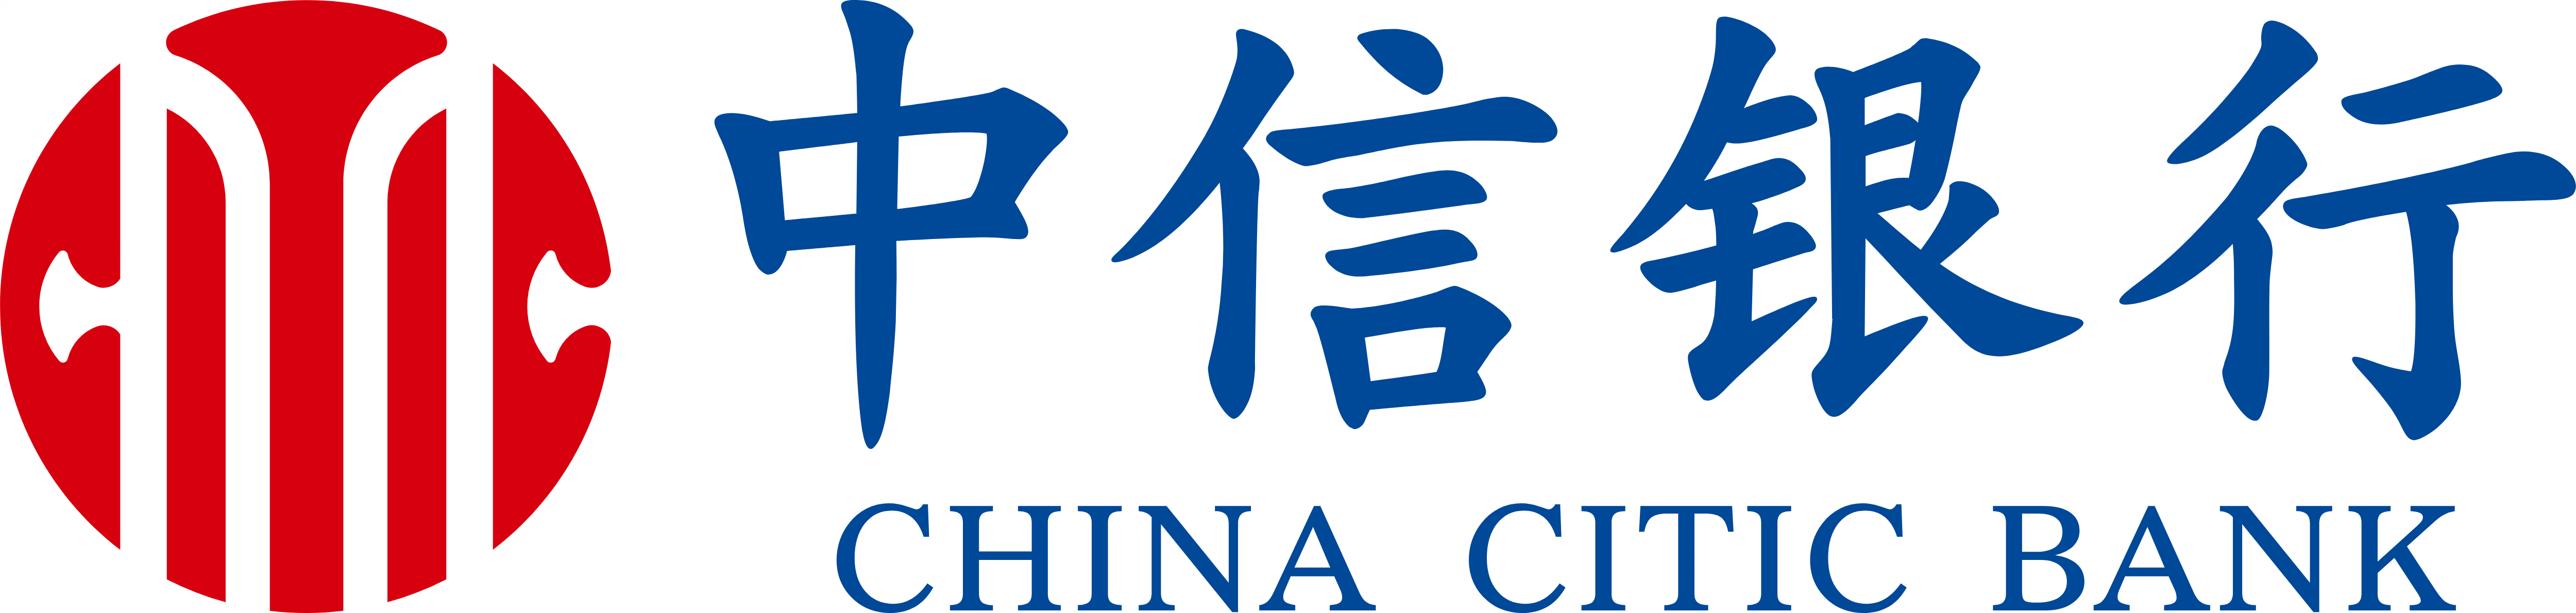 China Citic Bank Logo Transparent Background